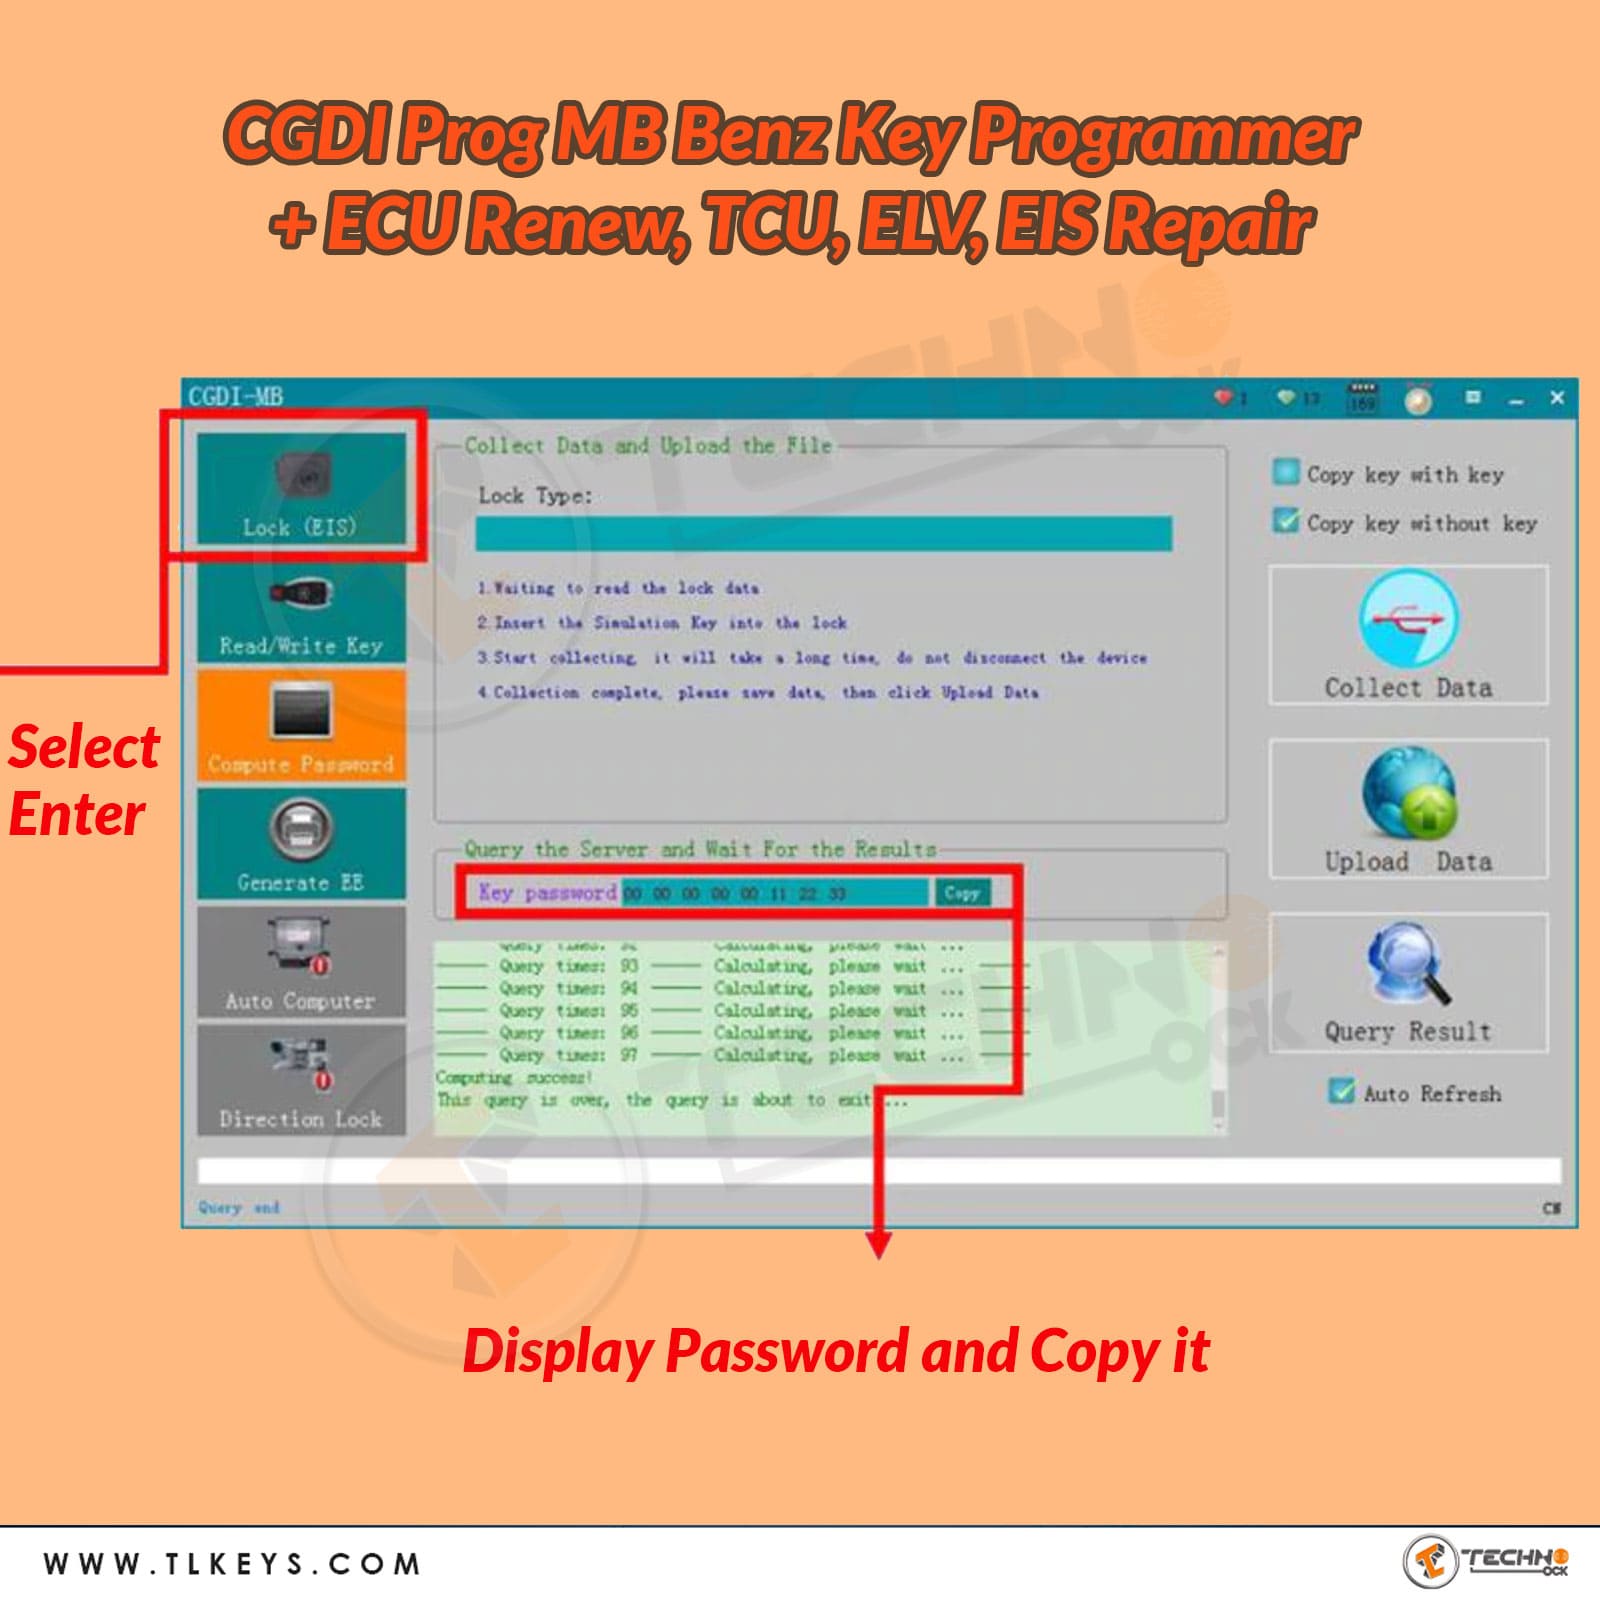 CGDI MB Prog Click Lock (EIS) then CGDI MB Display Password then Copy it